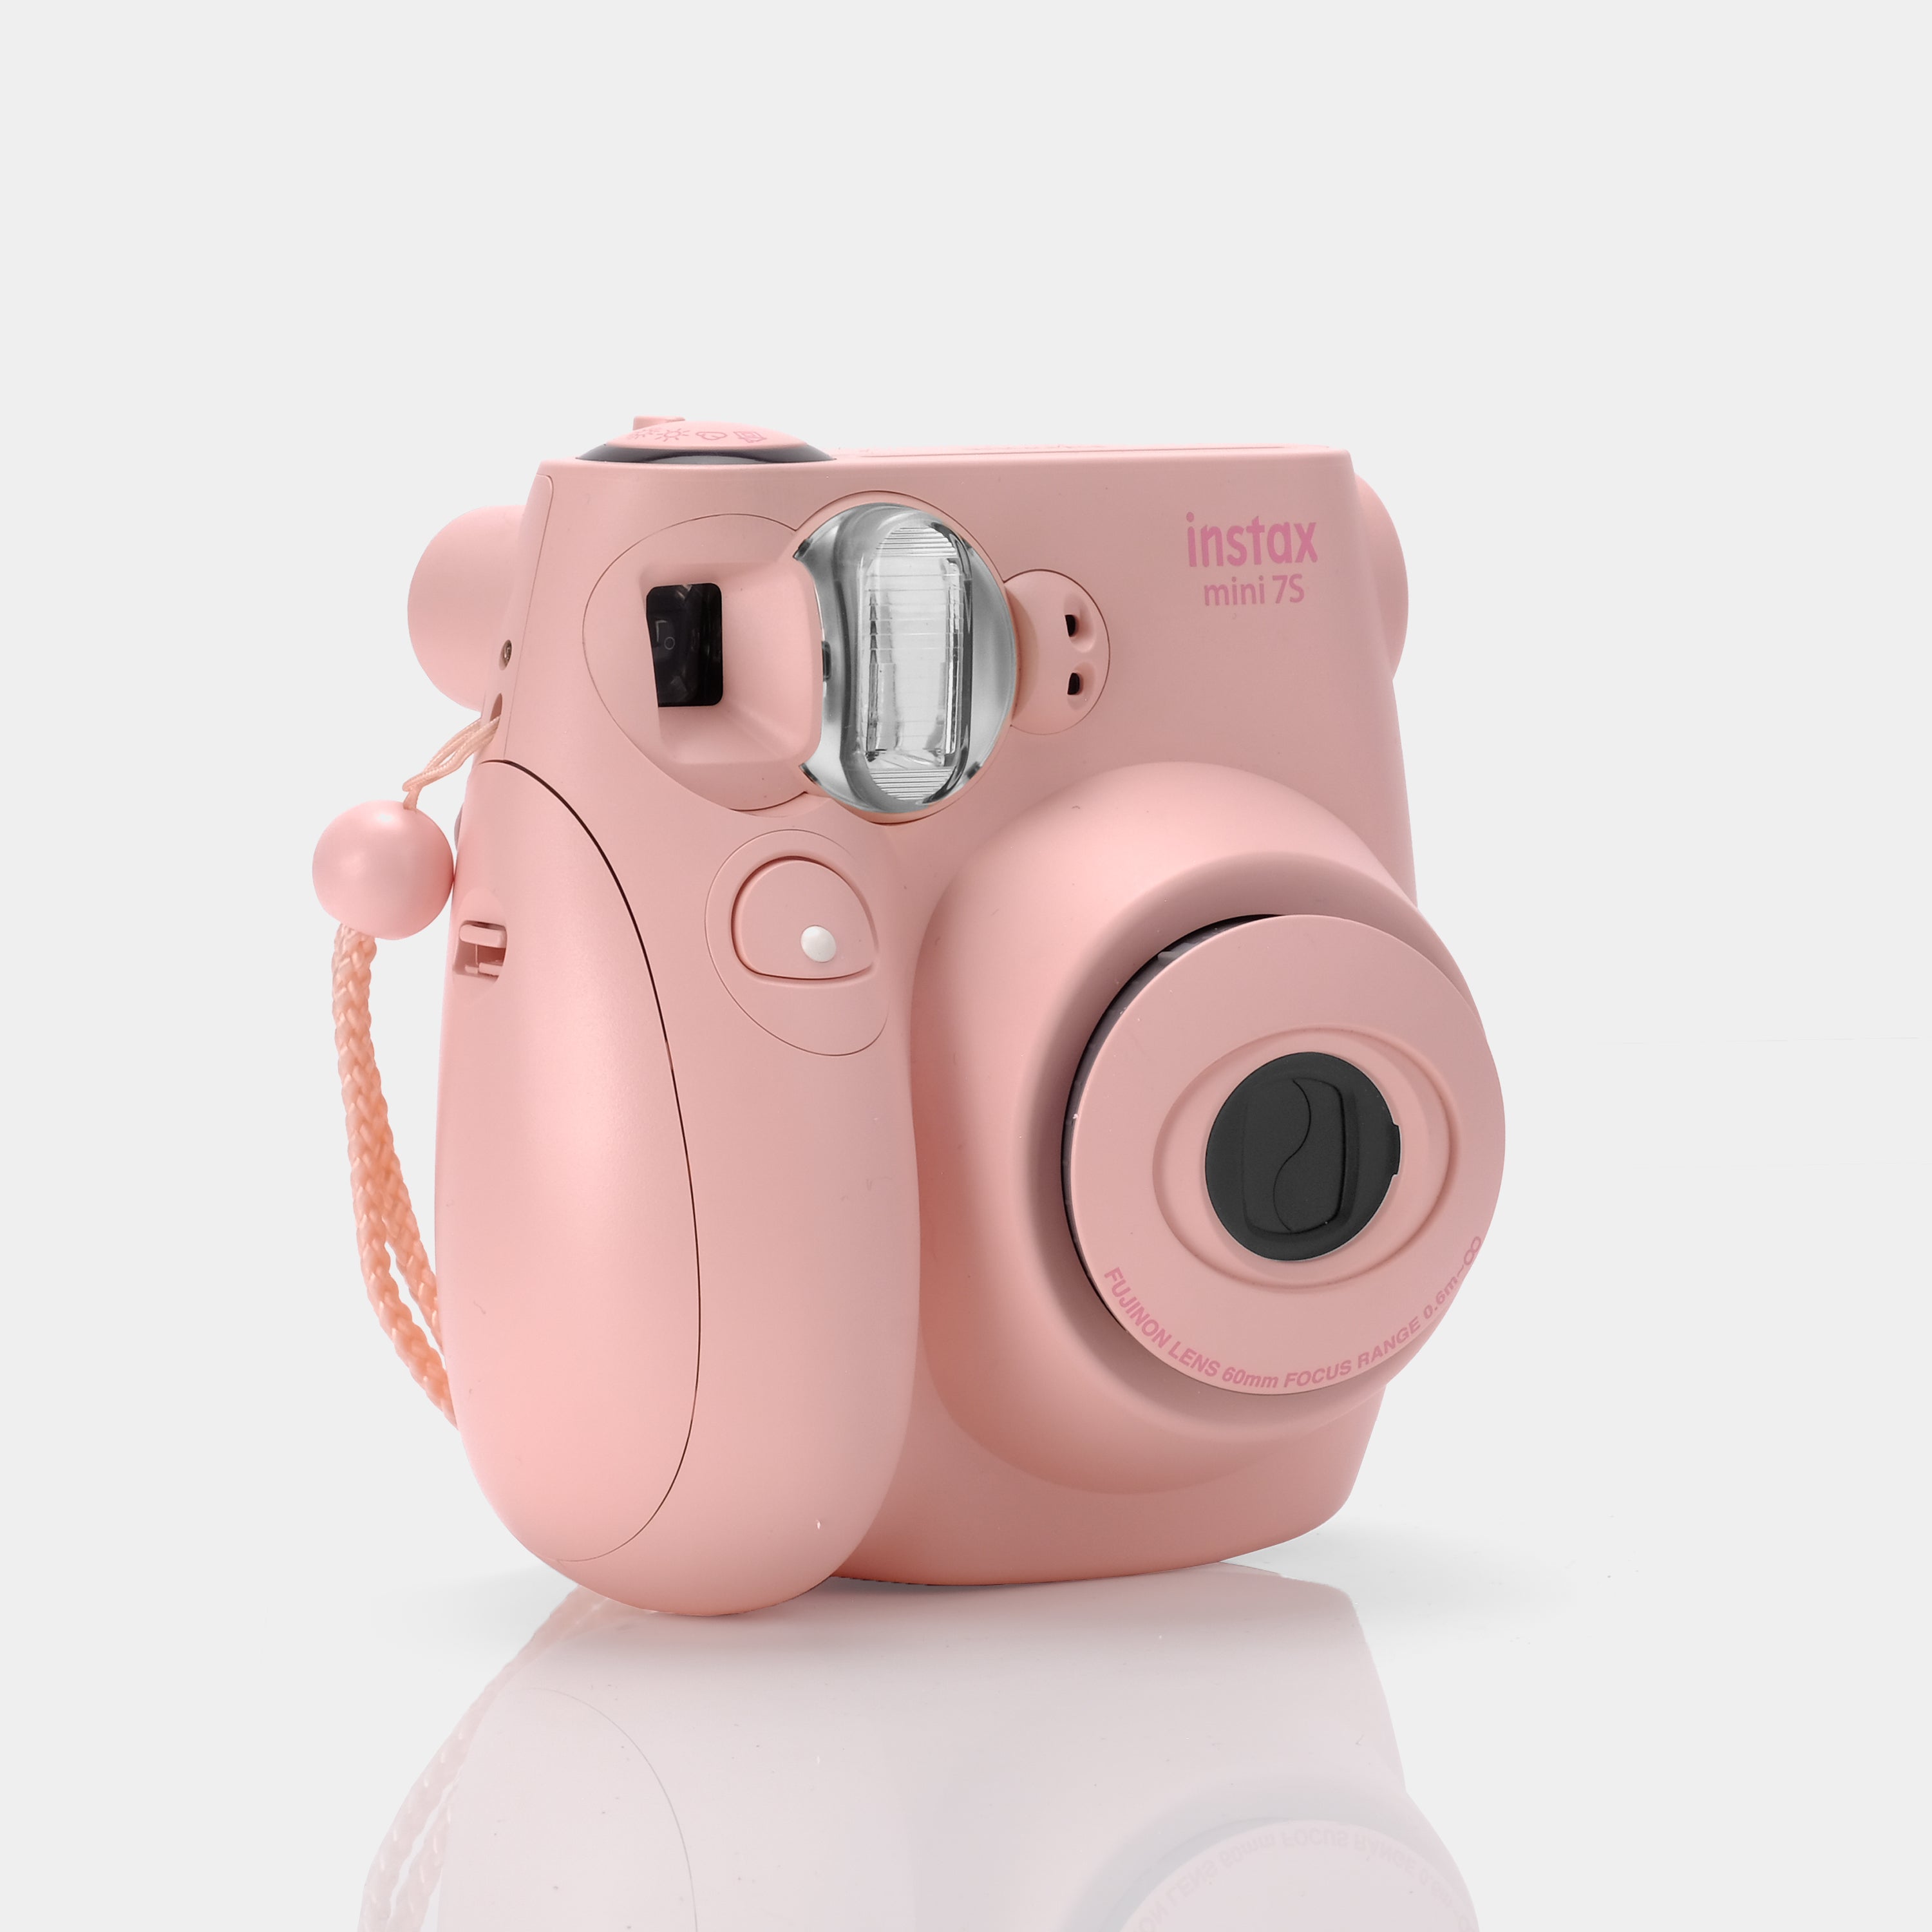 Fujifilm Instax Mini 7S Pink Instant Film Camera With Pink Bag - Refurbished